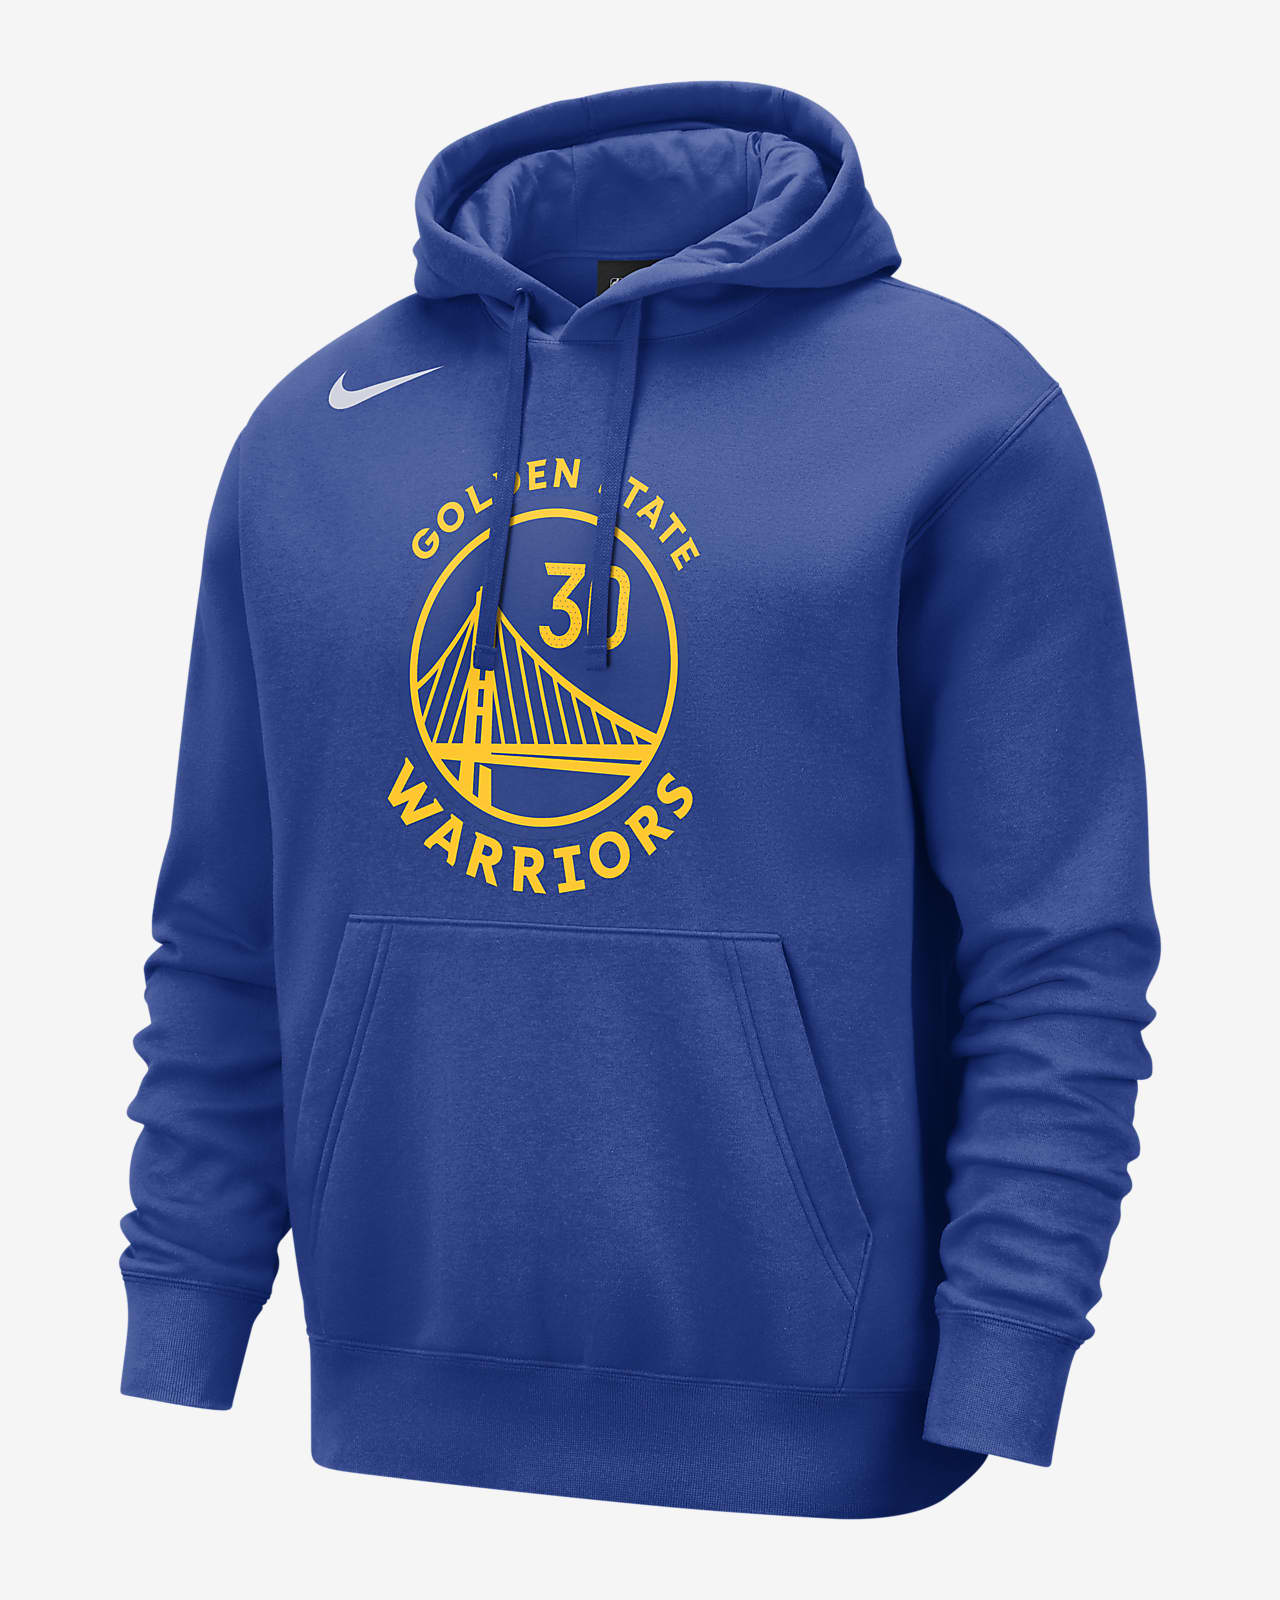 Golden State Warriors Club Men's Nike NBA Pullover Hoodie